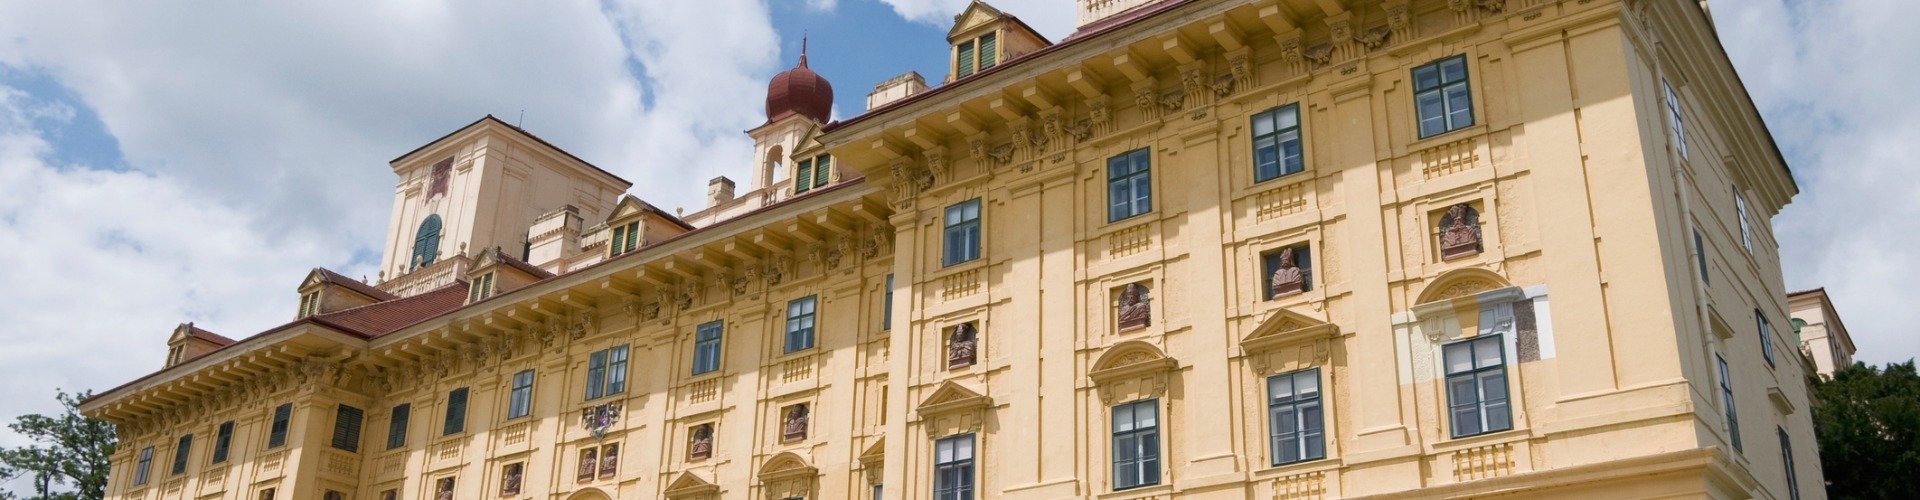 Ausflugsziel Schloss Esterházy